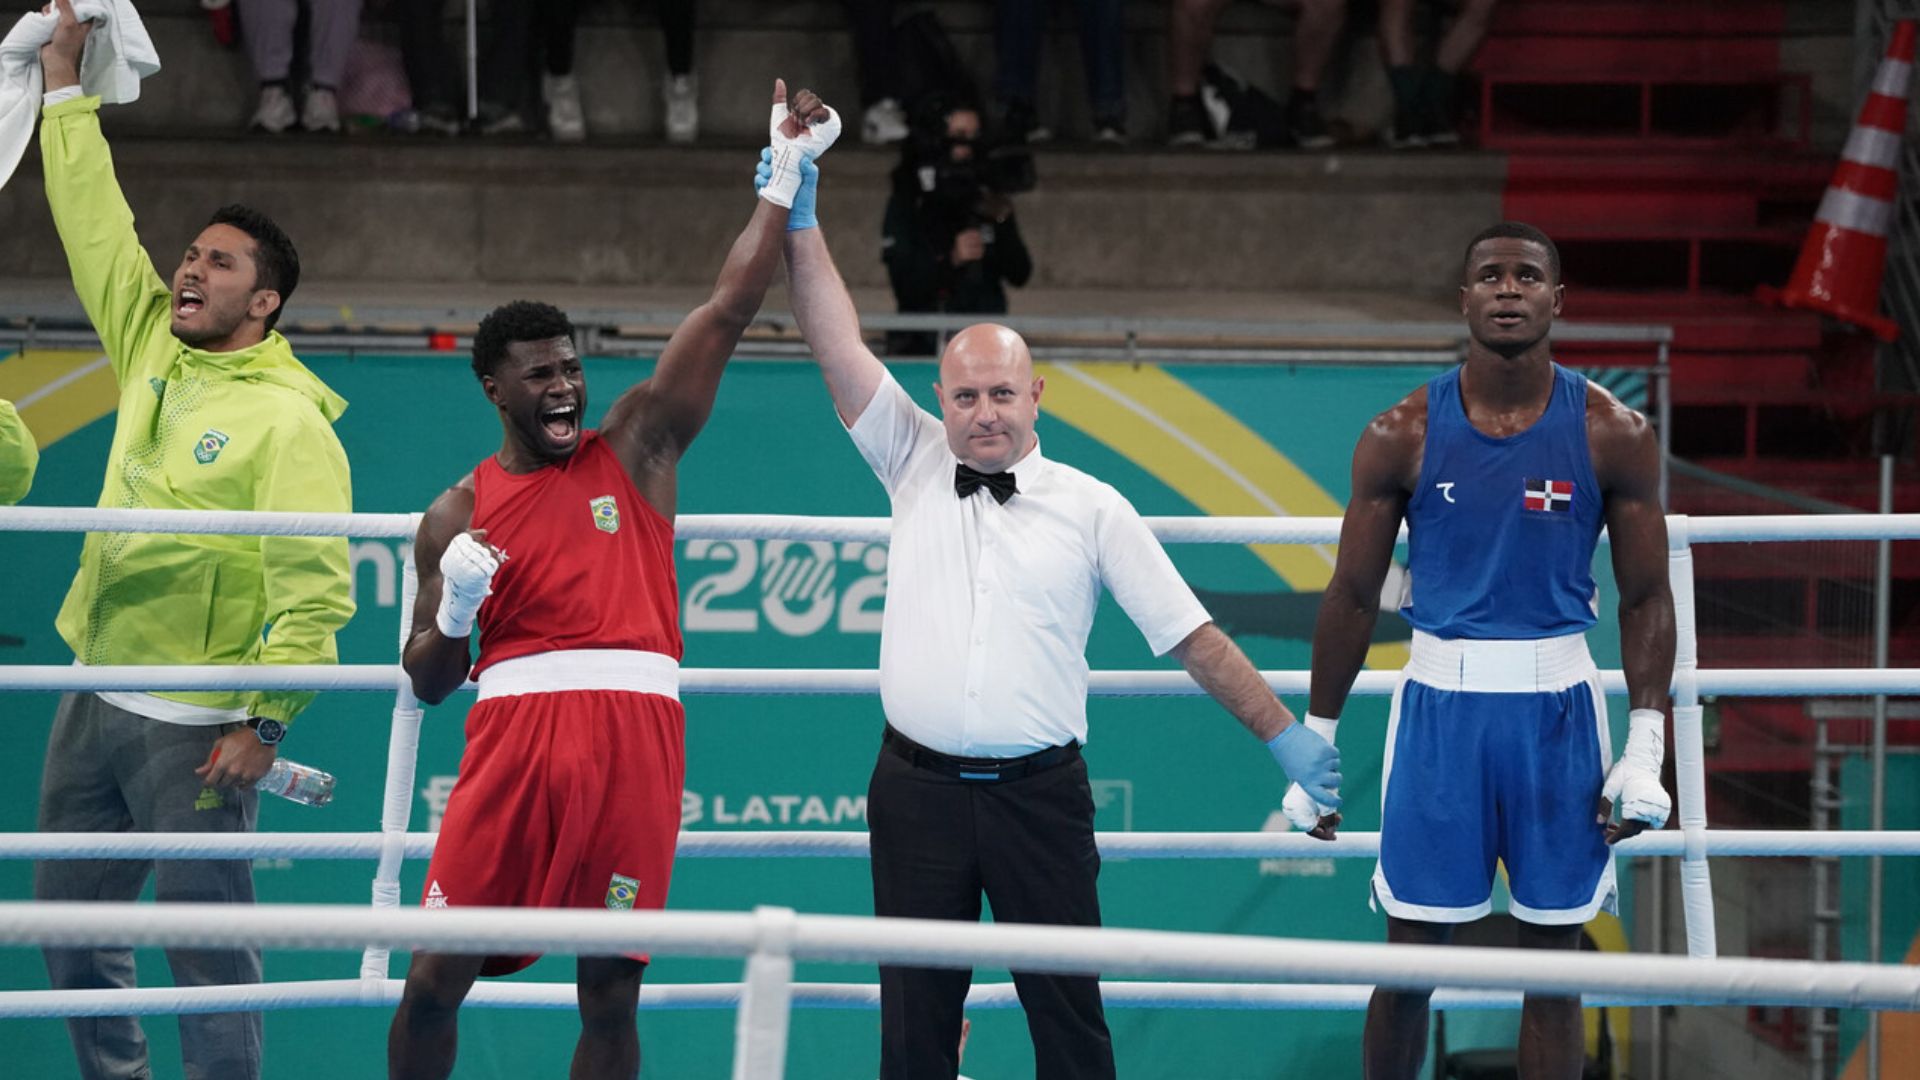 Brazilian Wanderley de Souza advances to the semifinals in male boxing